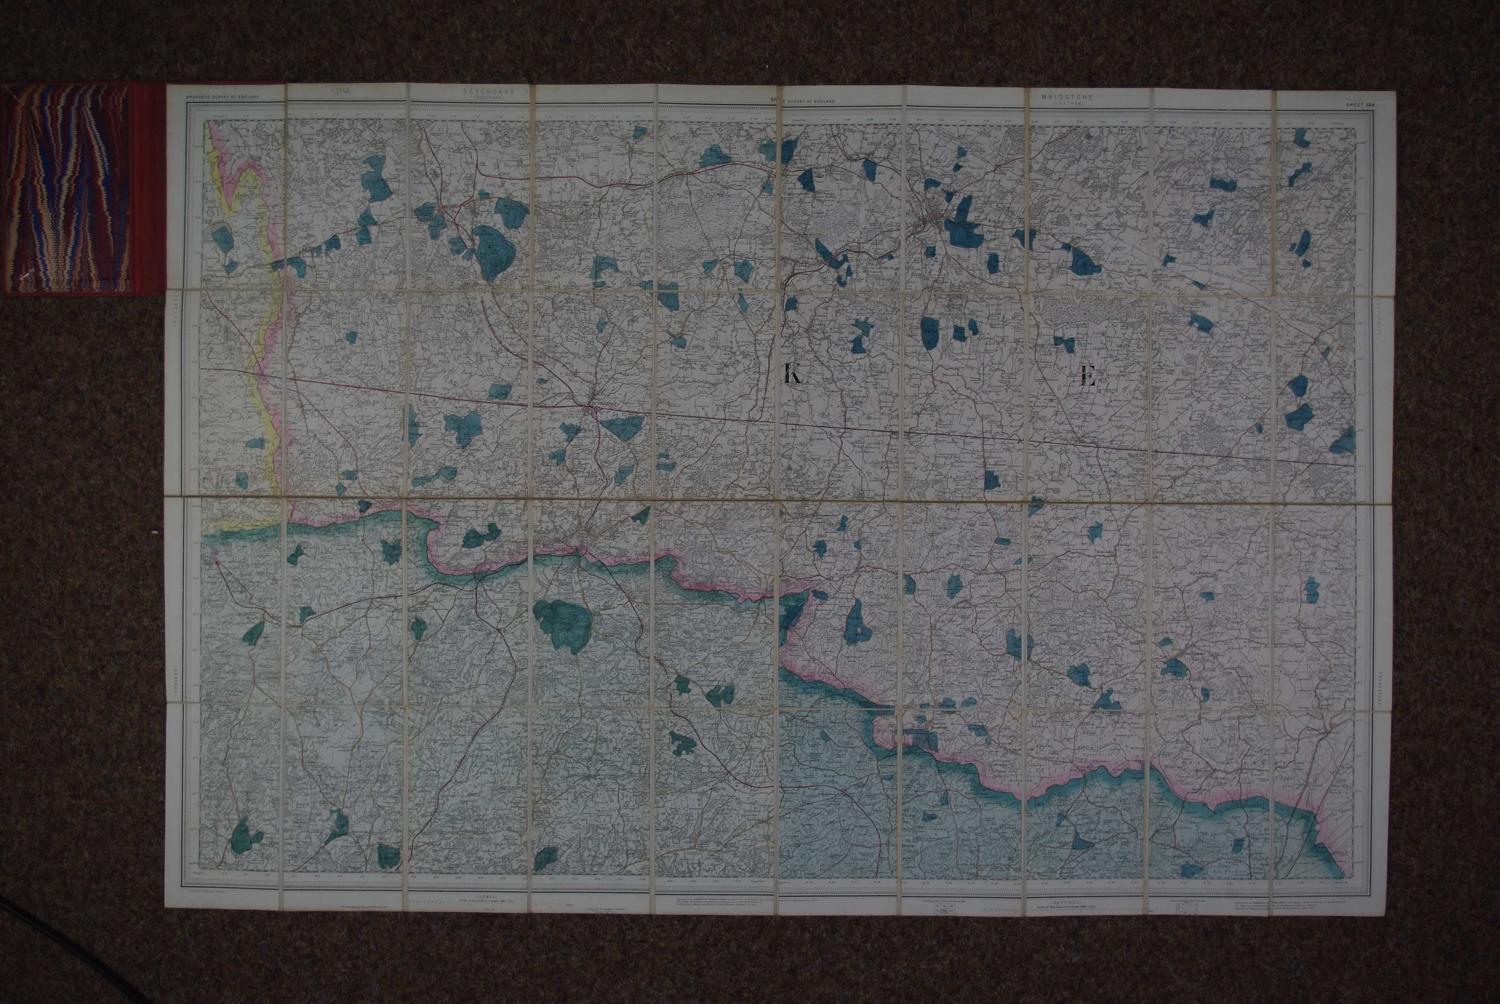 Ordnance Survey Map Sheet no 288 by Ordnance Survey - Colonel A.C. Cooke, Director General